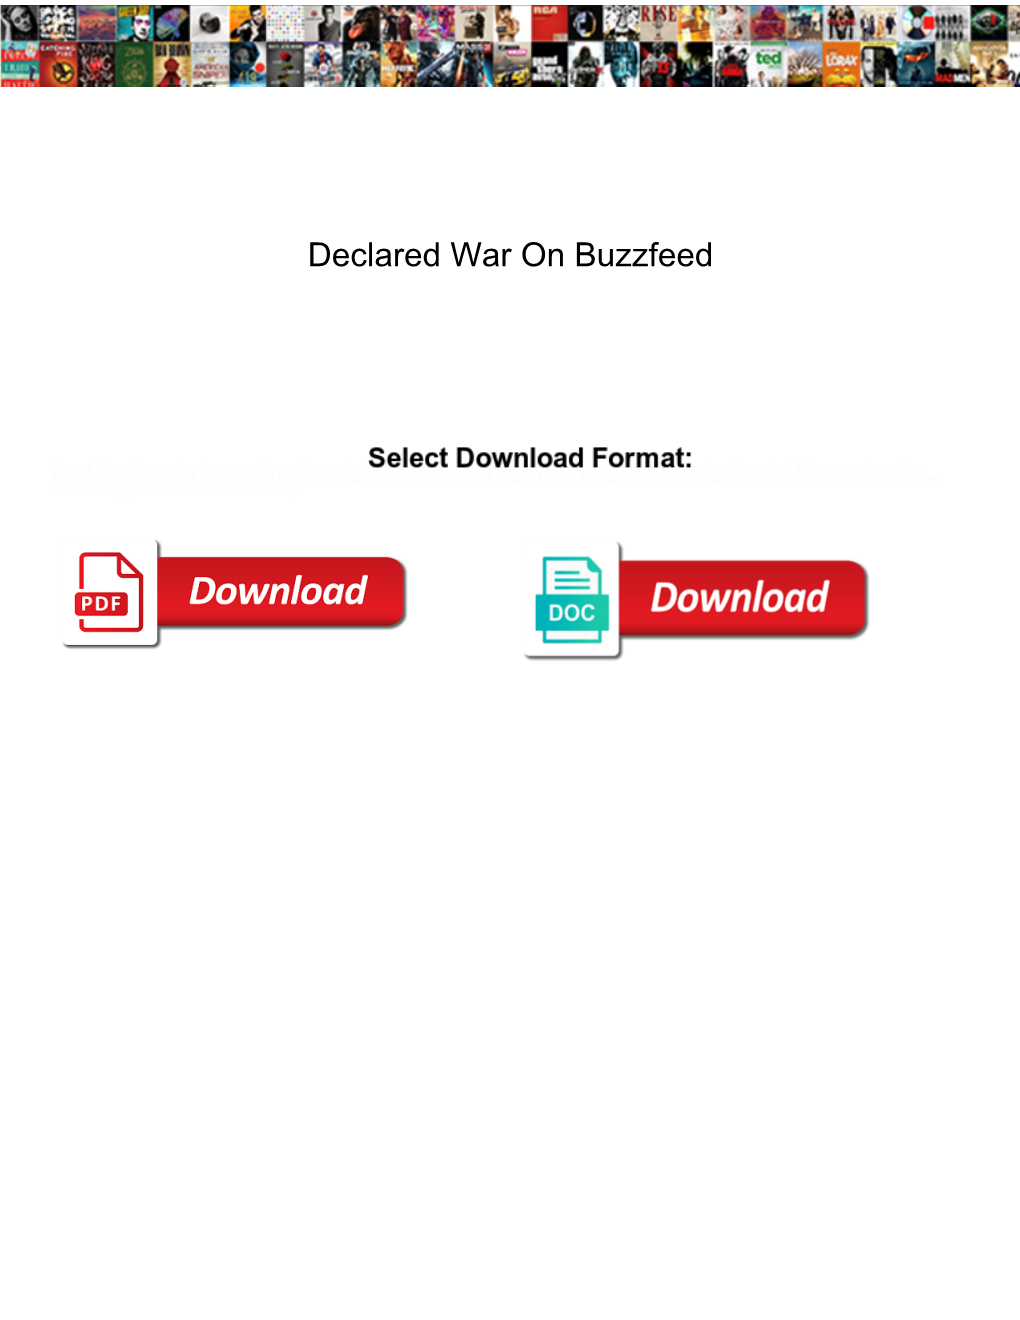 Declared War on Buzzfeed